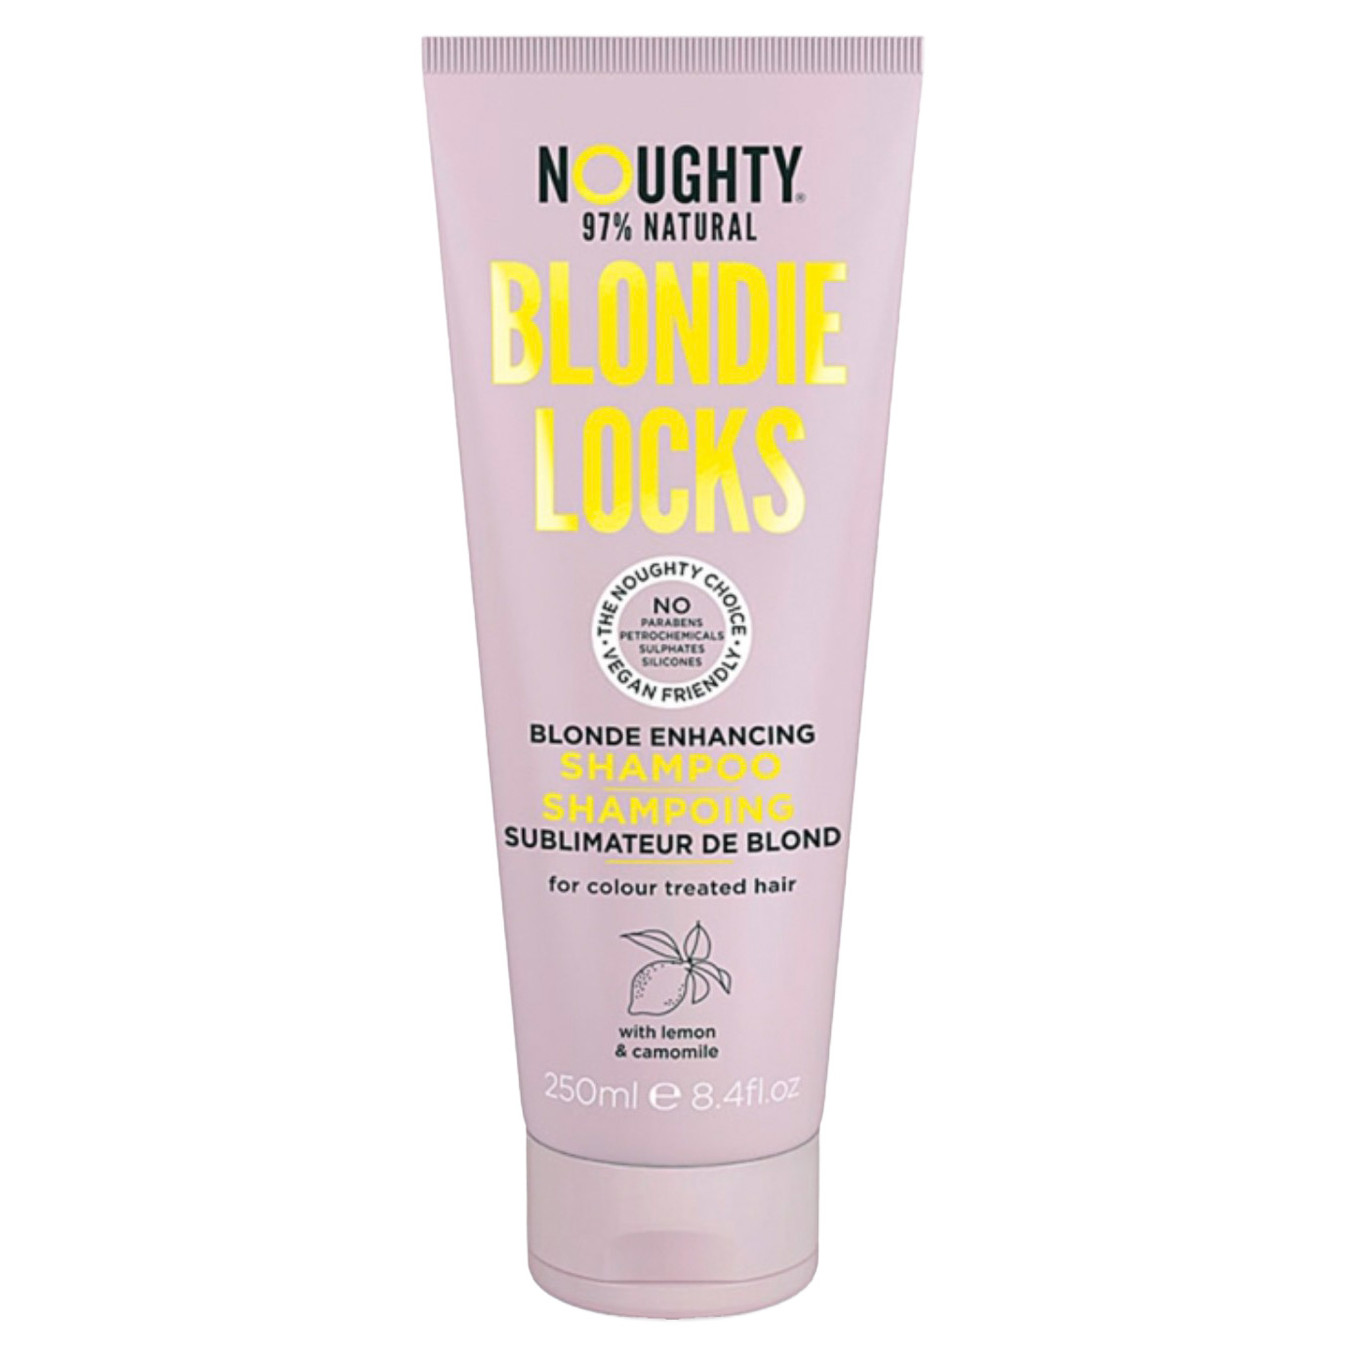 Noughty Blondie Locks Blonde Enhancing Shampoo (8.4 oz)